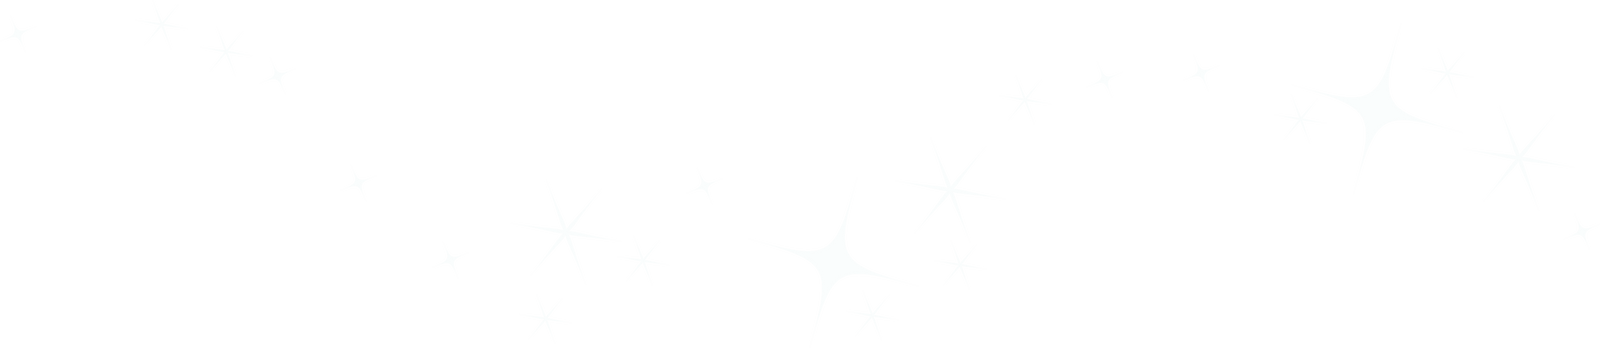 Twirling Stars Illustration